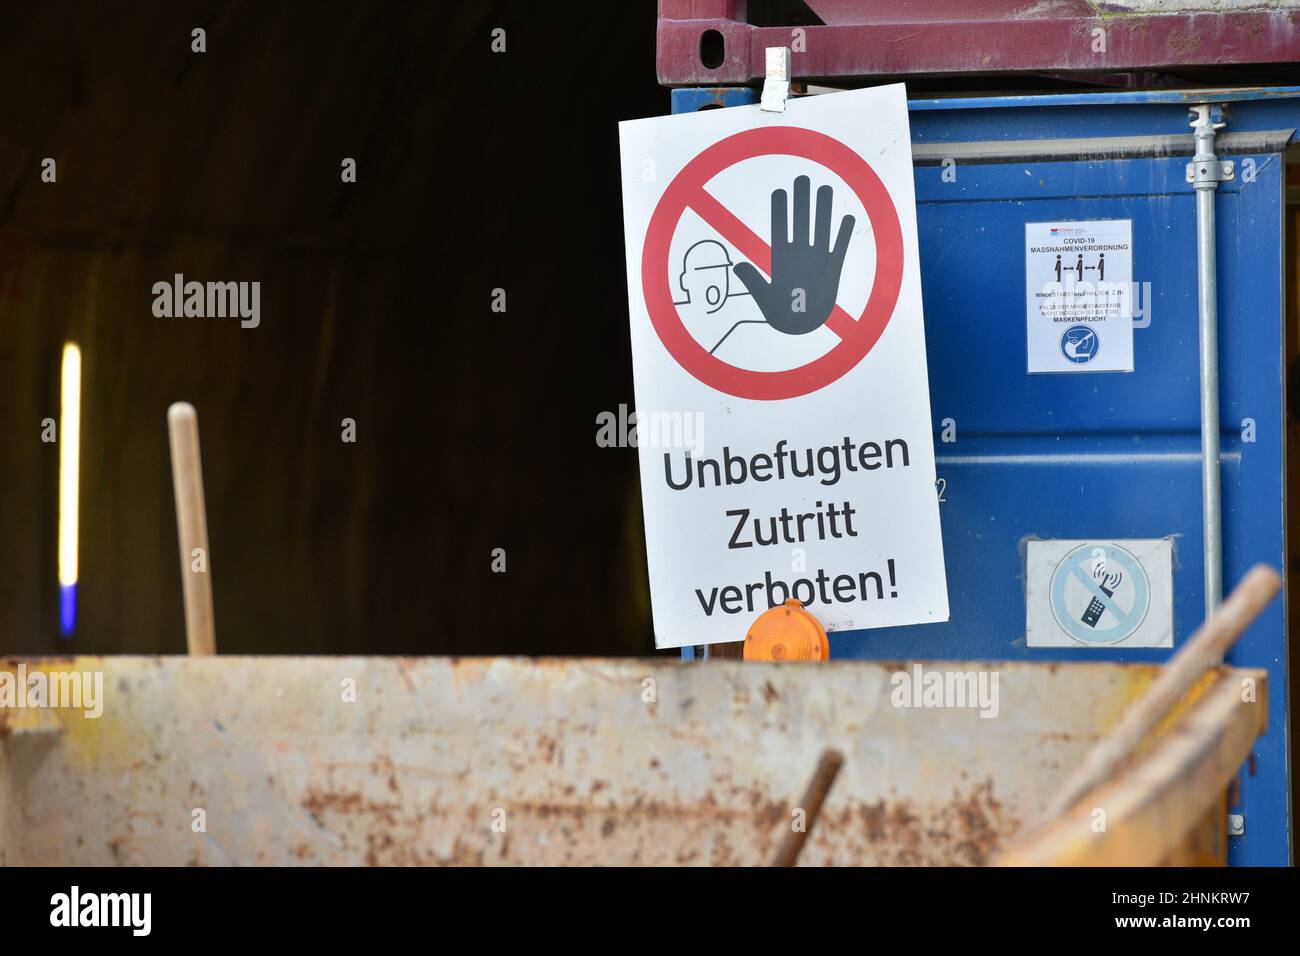 Schild - Baustelle - betreten verboten - Signo - obra - no hay entrada. Foto de stock